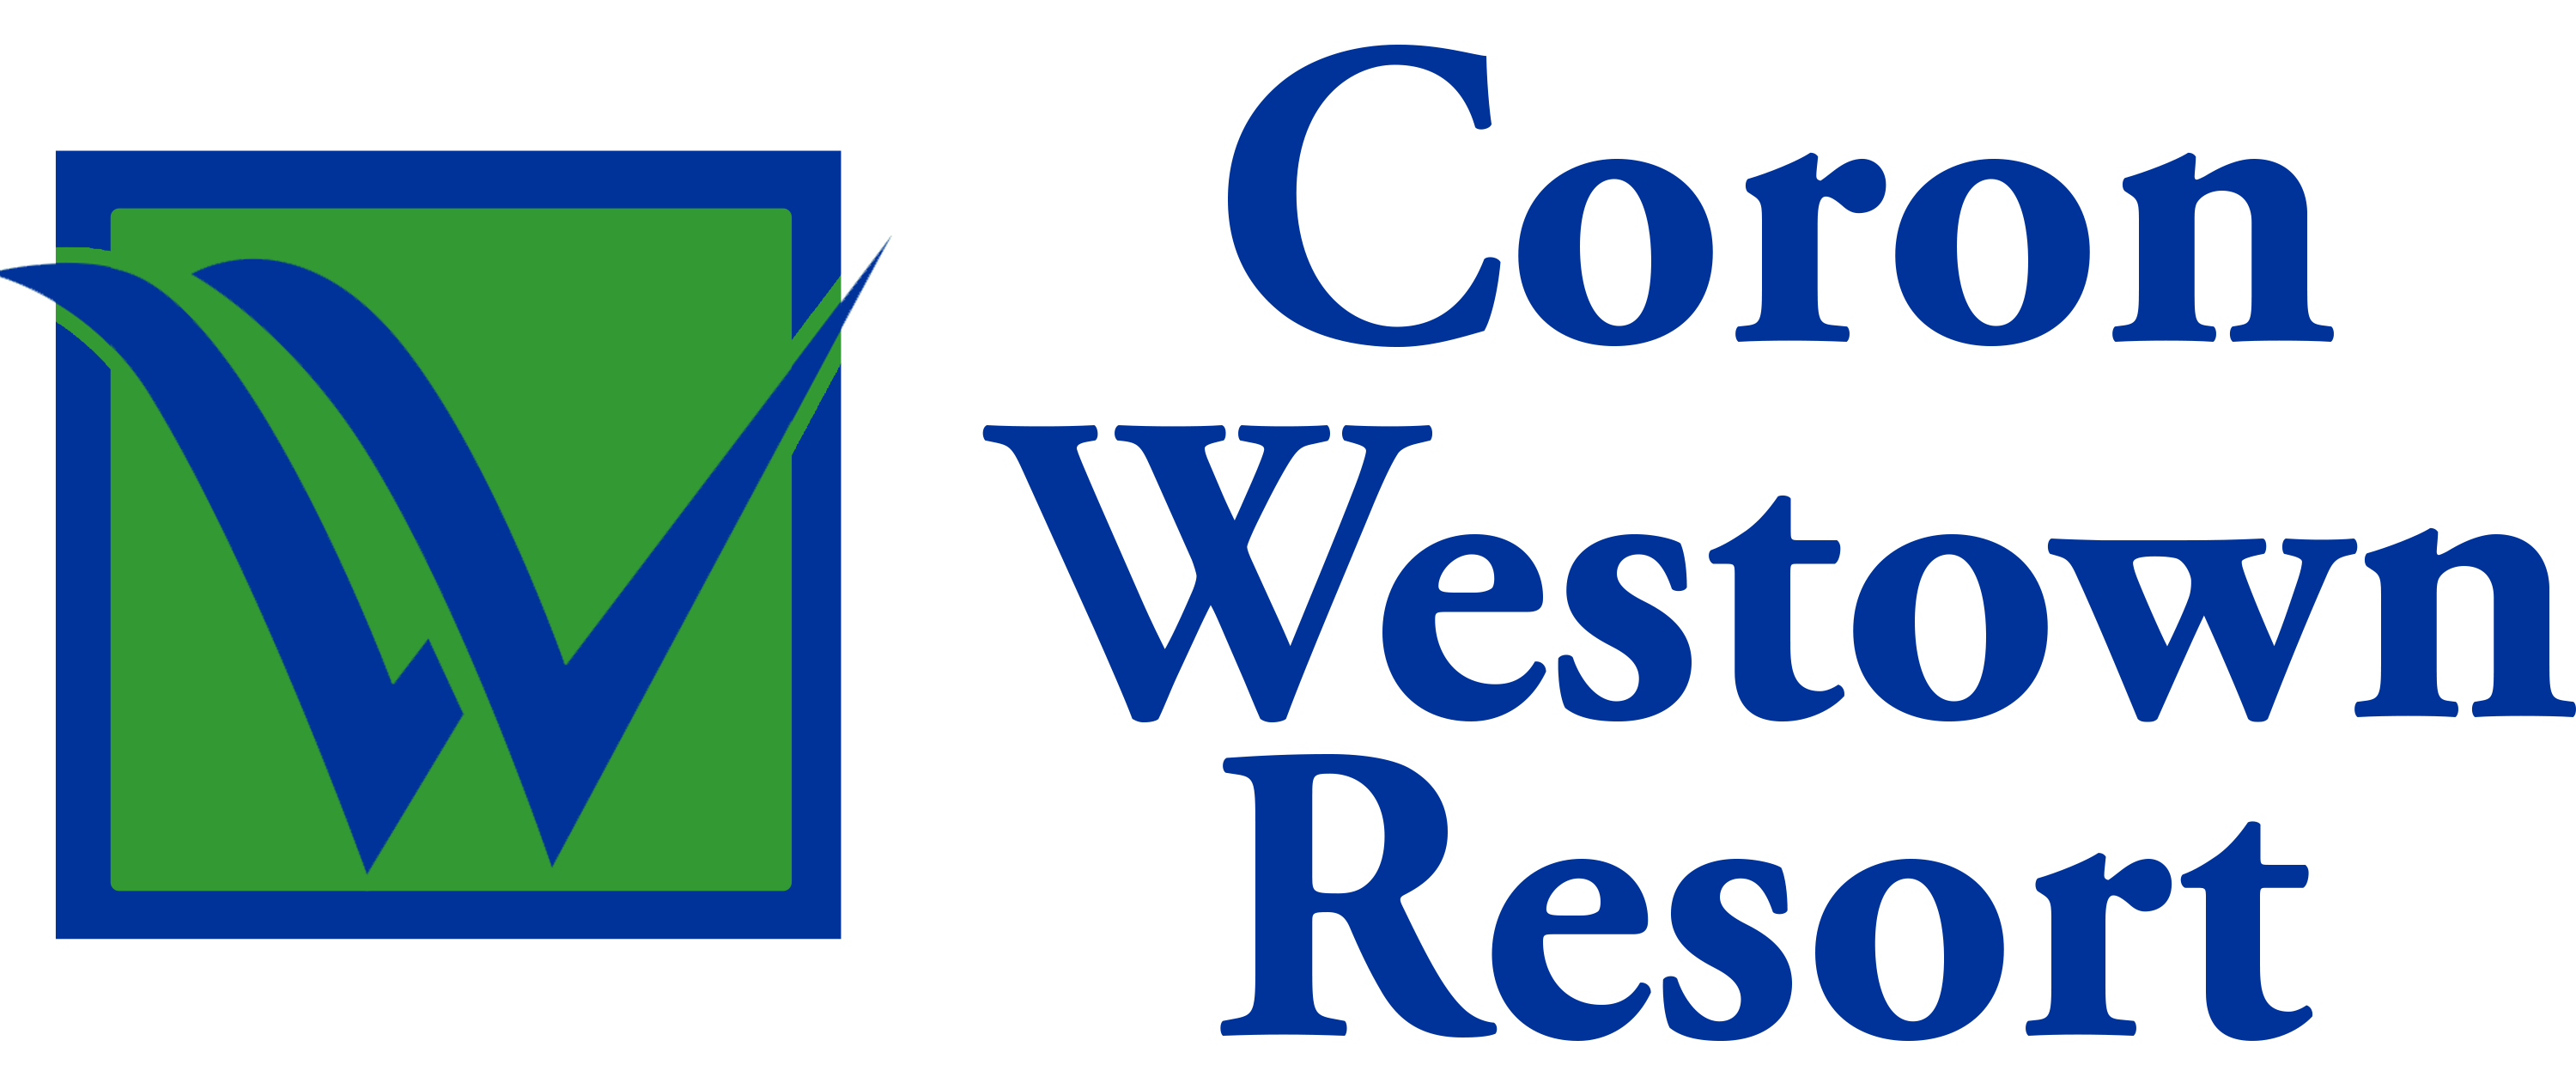 Coron Westown Resort